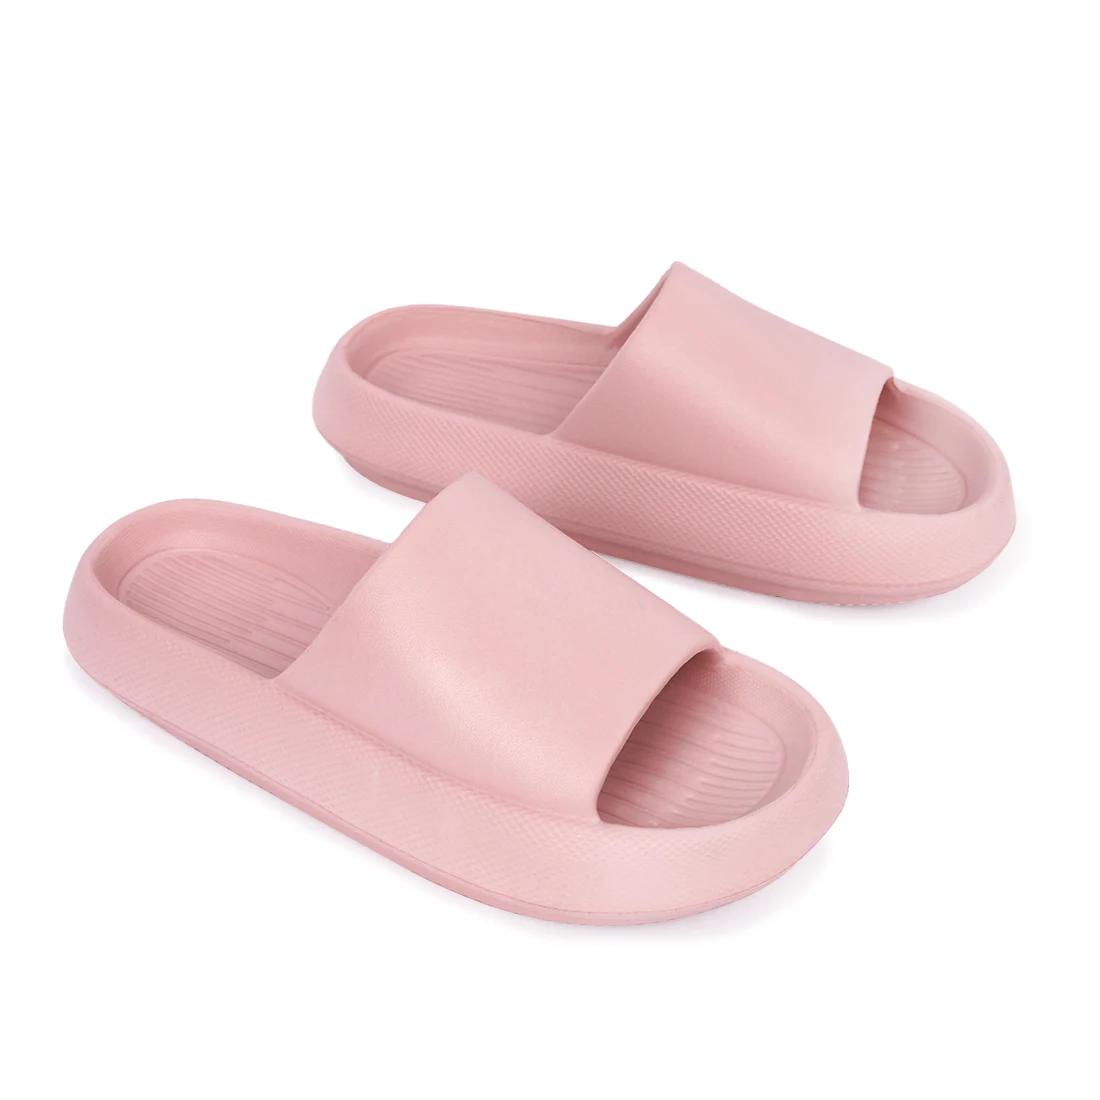 Wholesale  Women's Platform Sandals Comfort Wear-resistant Slippers Soft Shower Bathroom Women Summer Slippers  home Slippers